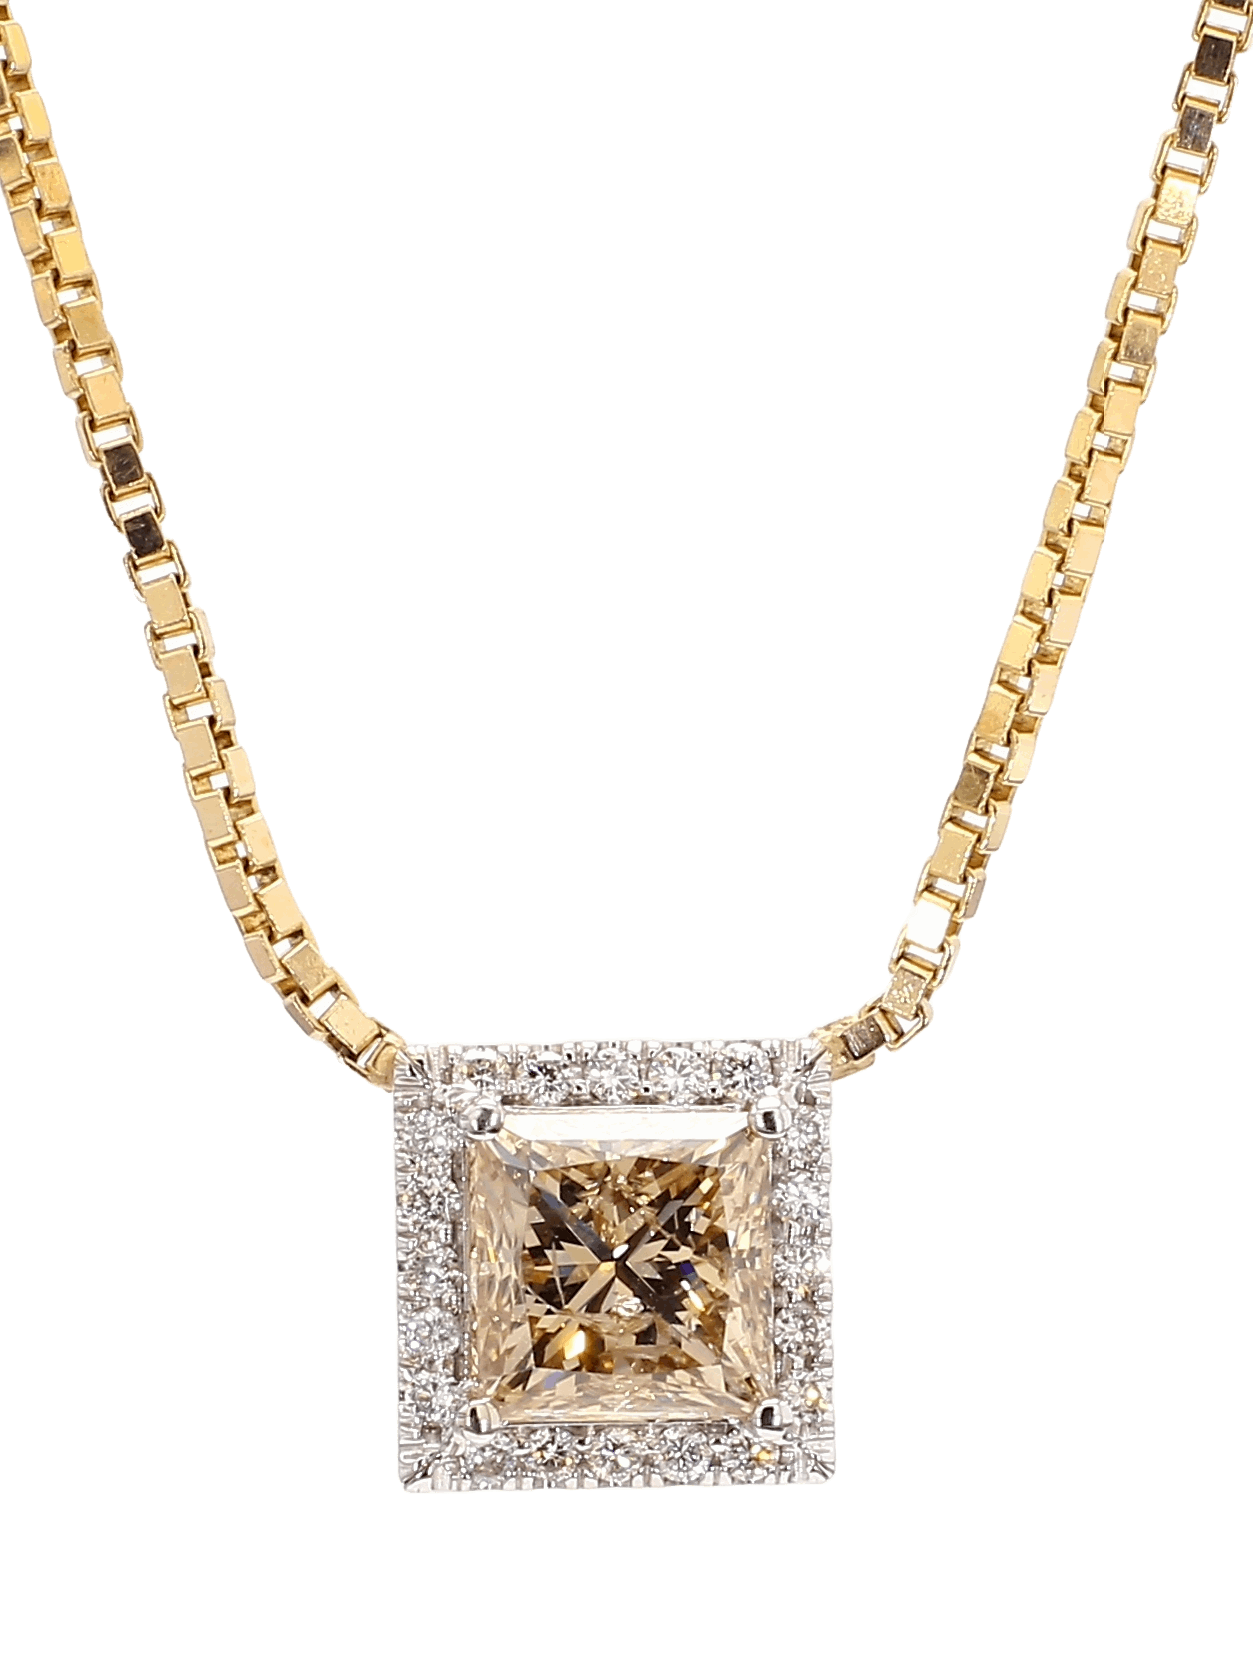 PRINCESS CUT DIAMOND NECKLACE, 3.02 CARAT, FANCY BROWN -YELLOW FRAMED WITH WHITE DIAMONDS, 14K YELLOW